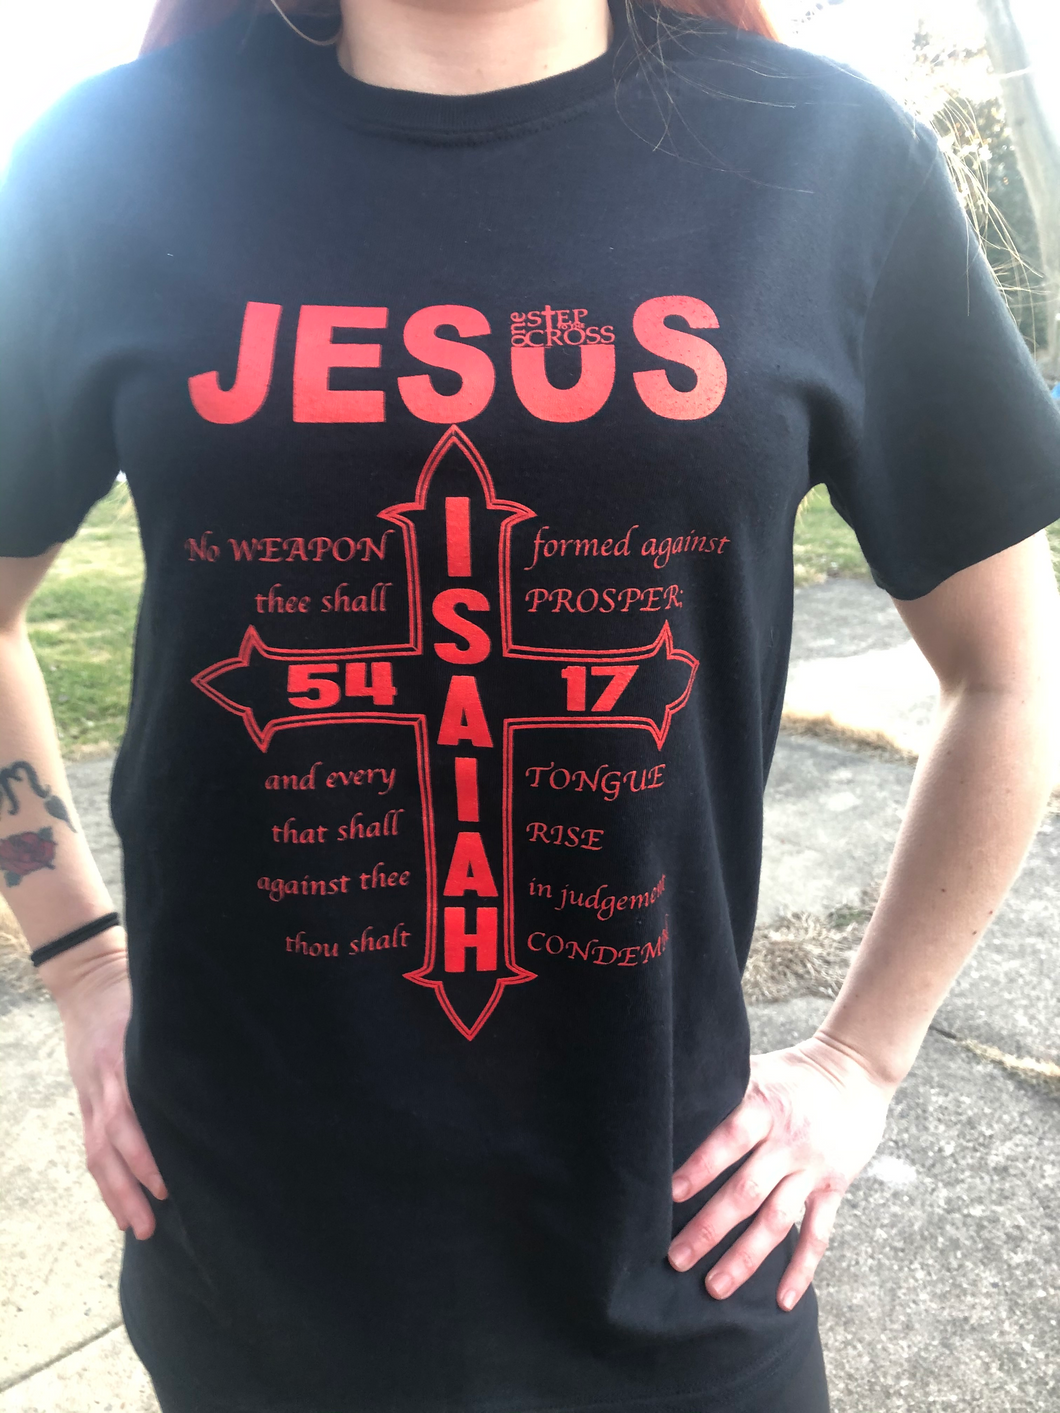 Isaiah 54:17 t-shirt